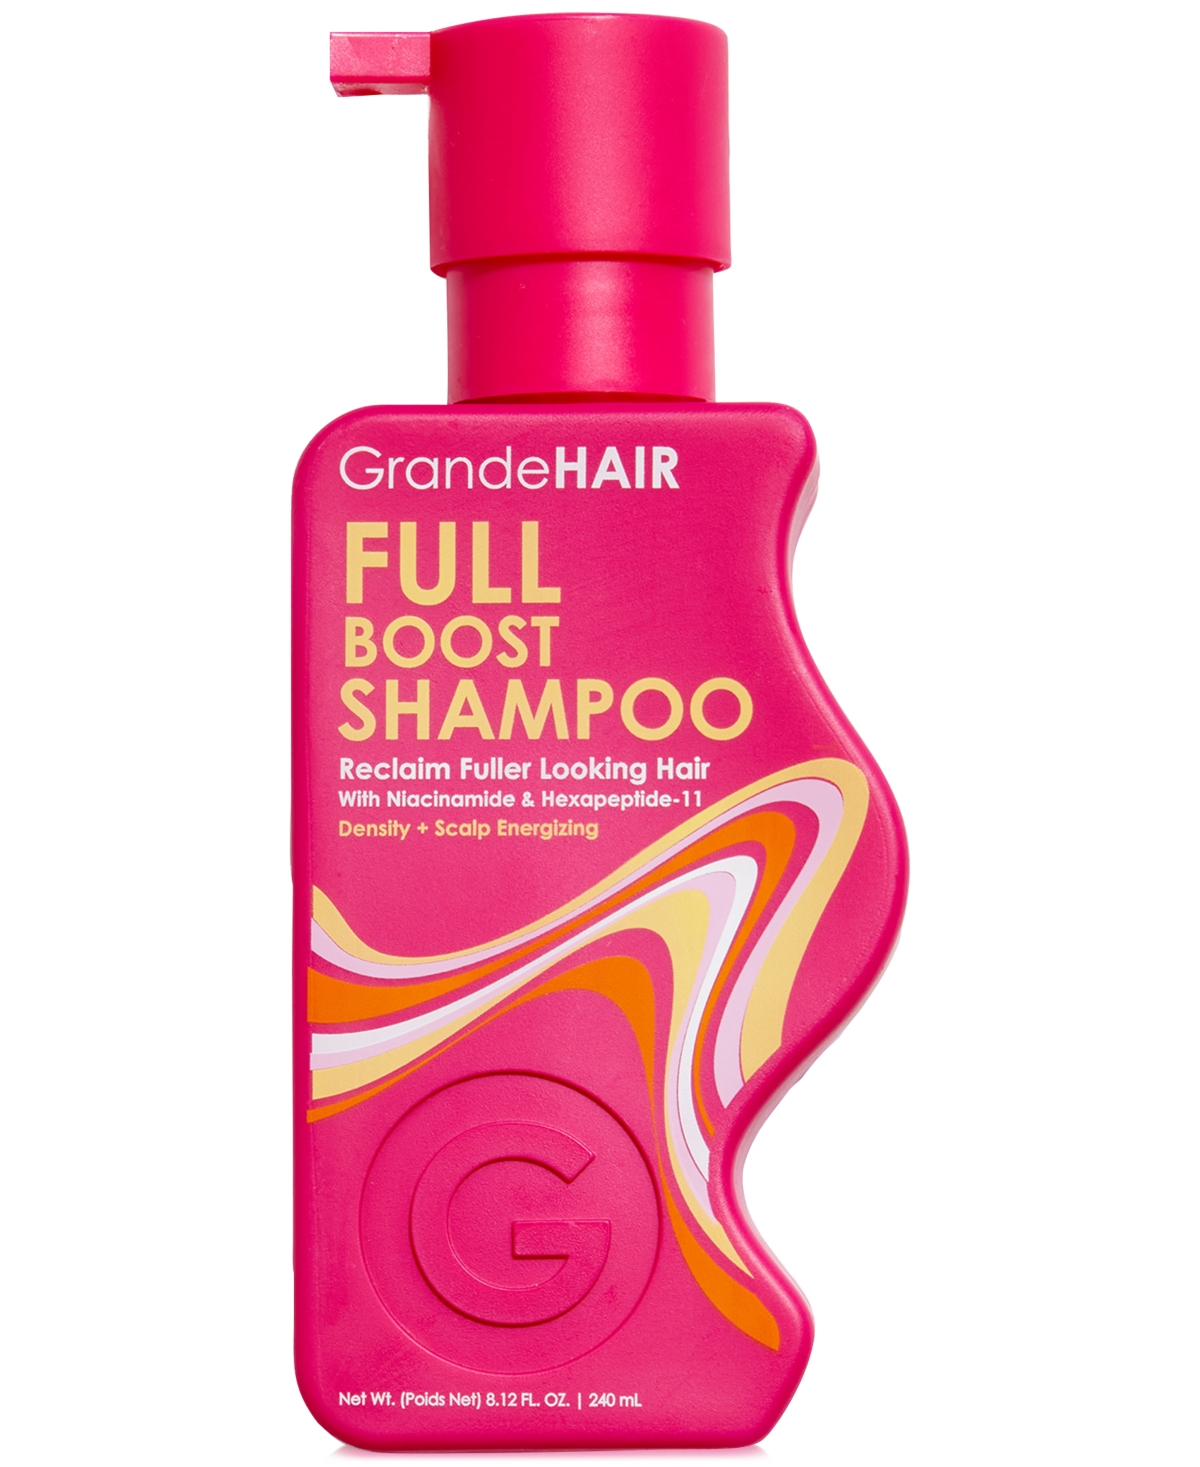 GrandeHAIR Full Boost Shampoo, 8.12 oz.